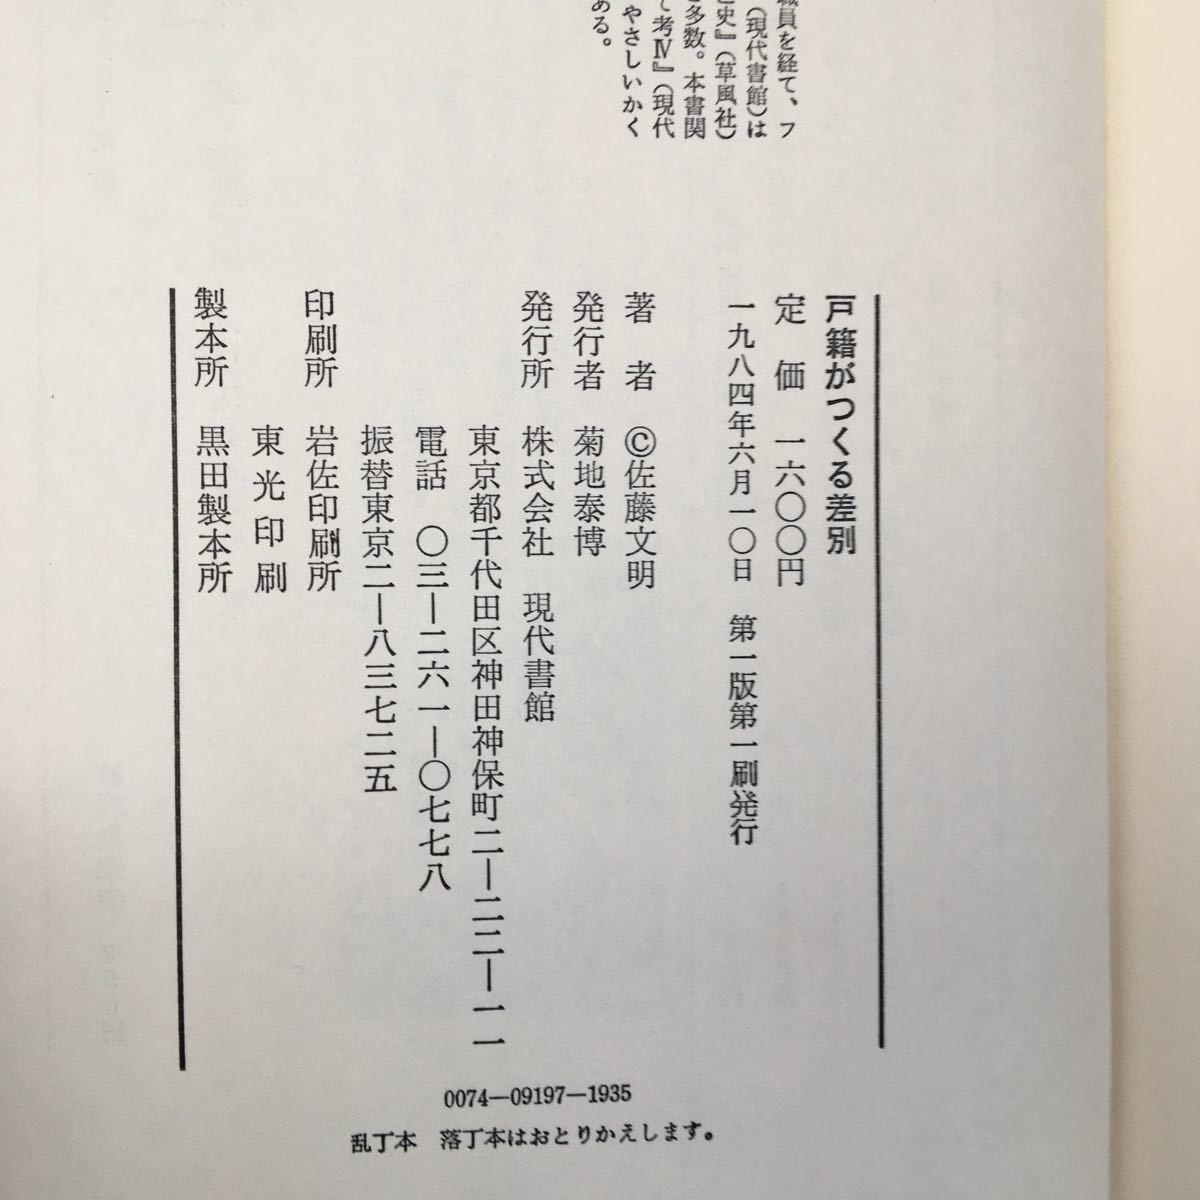 zaa-511♪戸籍がつくる差別 単行本 1984/6/10　 佐藤 文明 (著)　現代書館